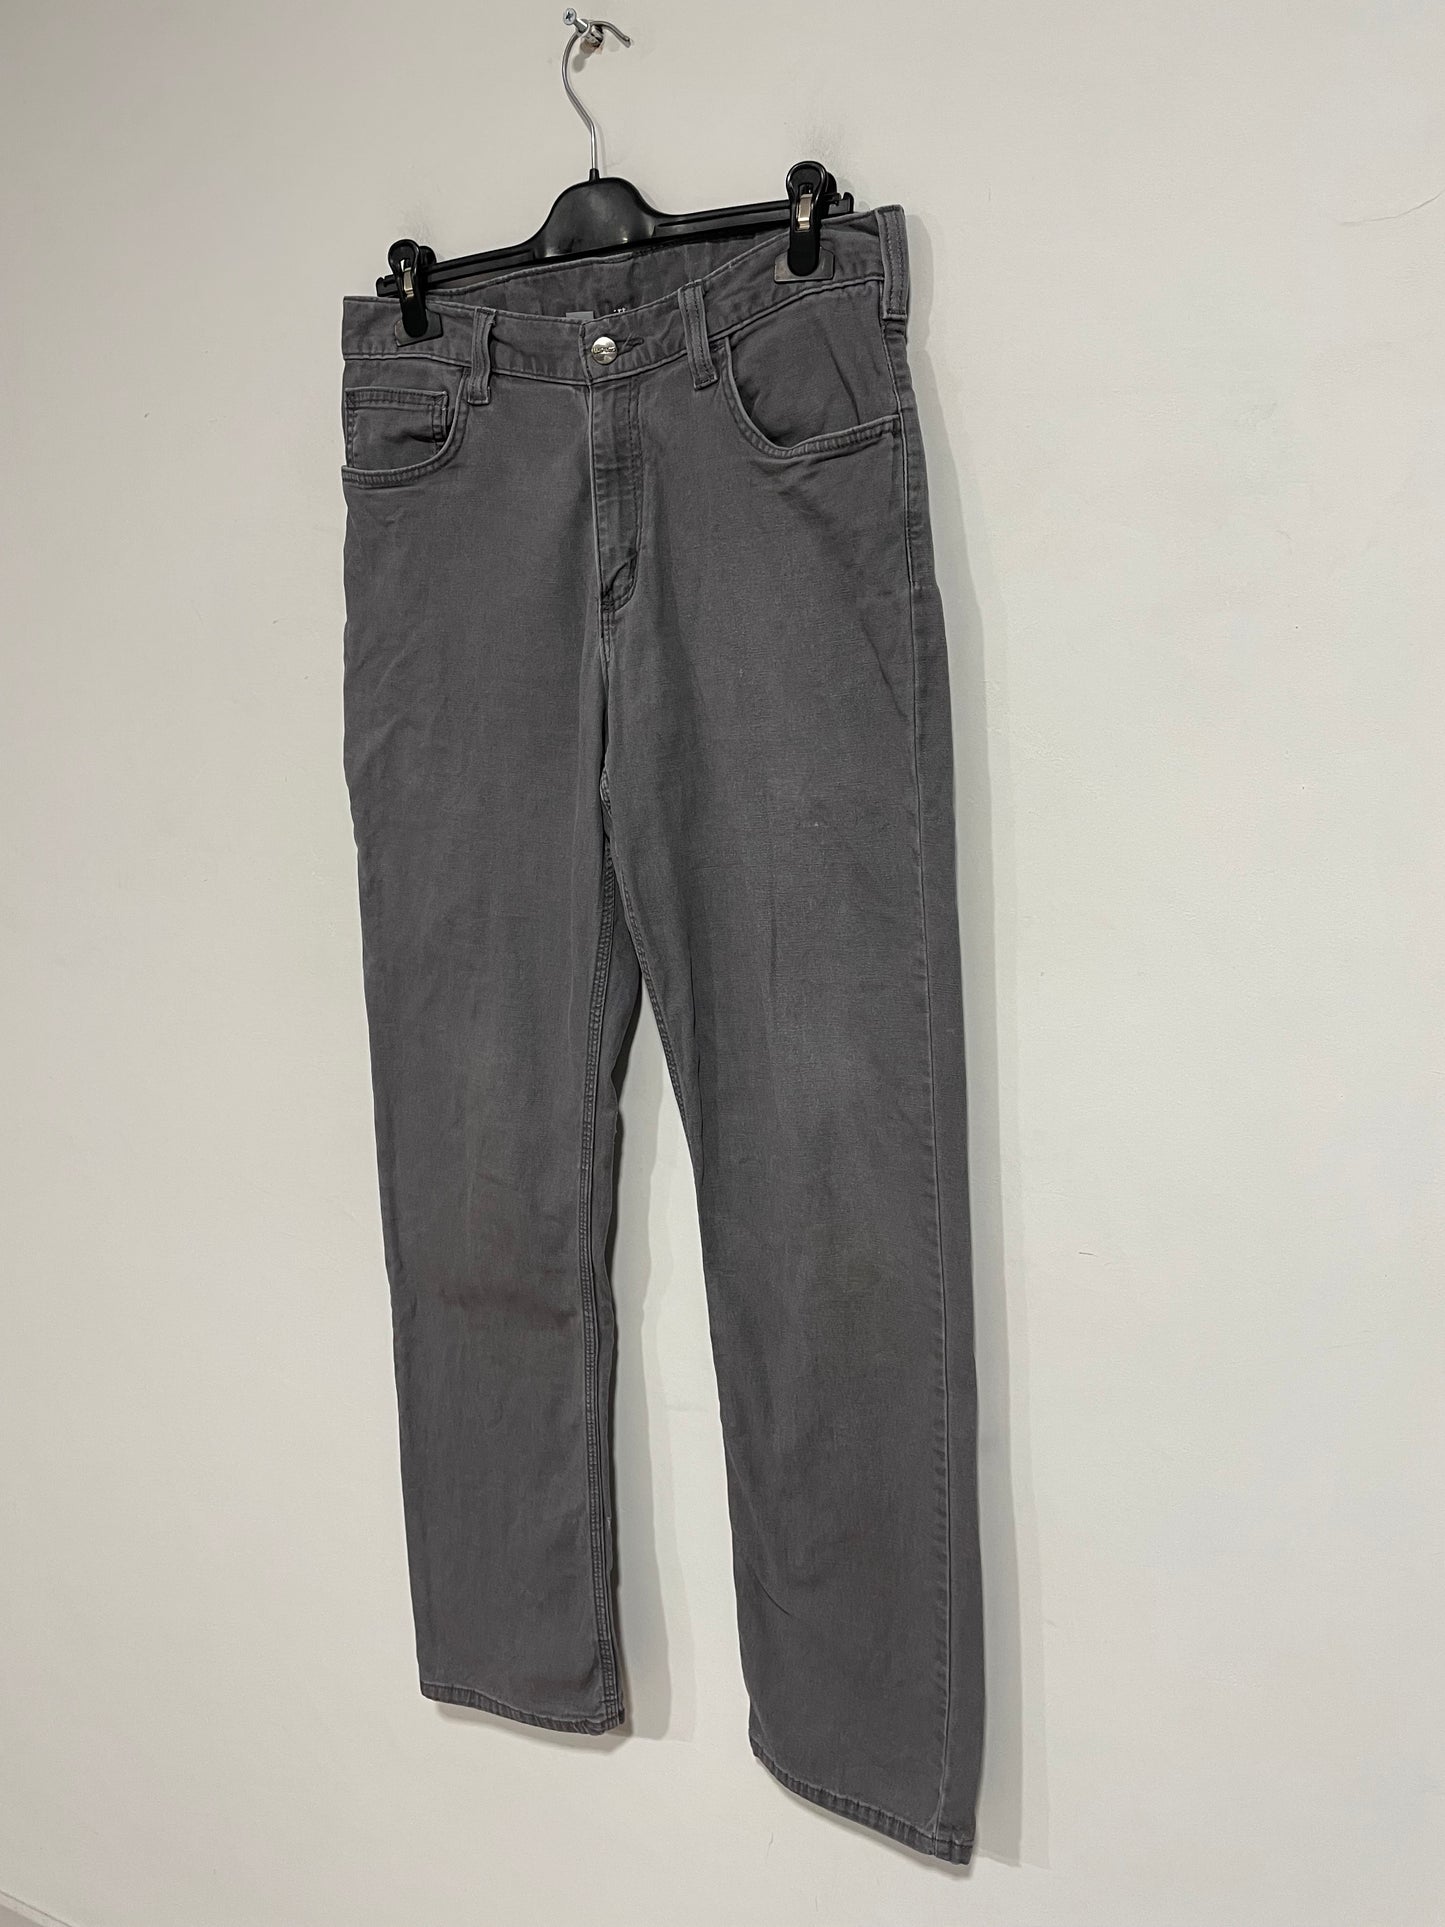 Jeans Carhartt workwear USA (D354)